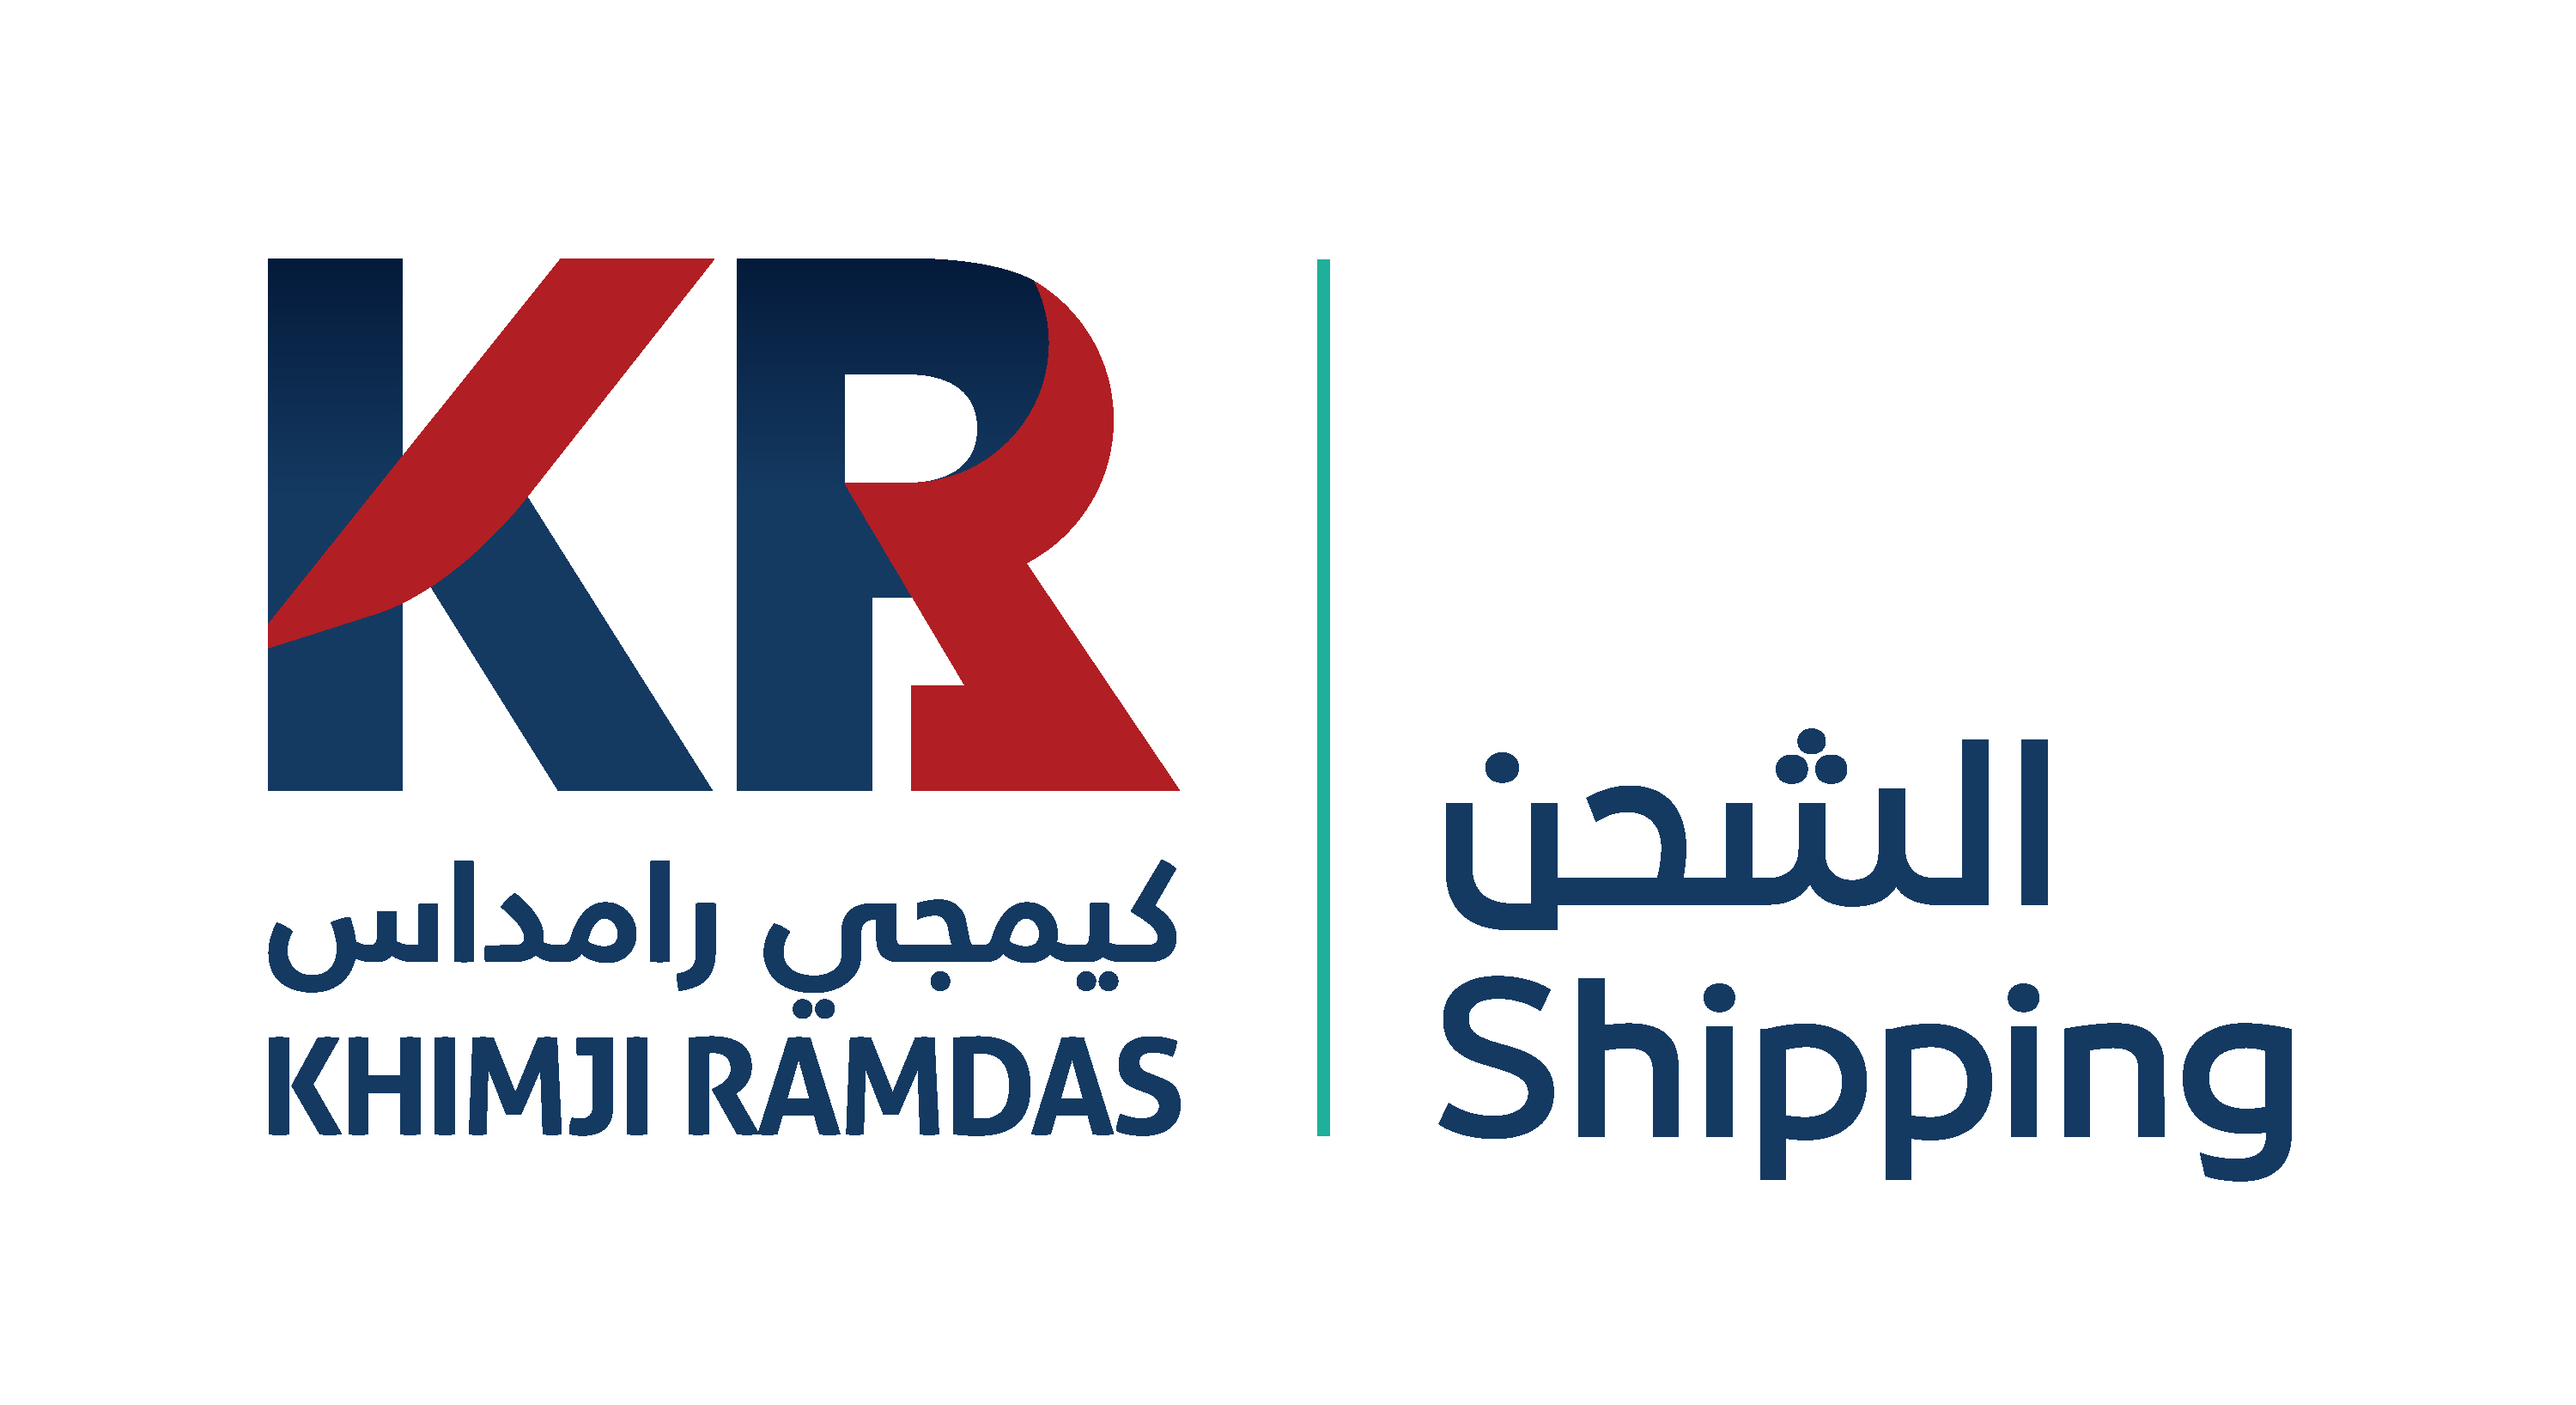 KHIMJI RAMDAS SHIPPING (KR)